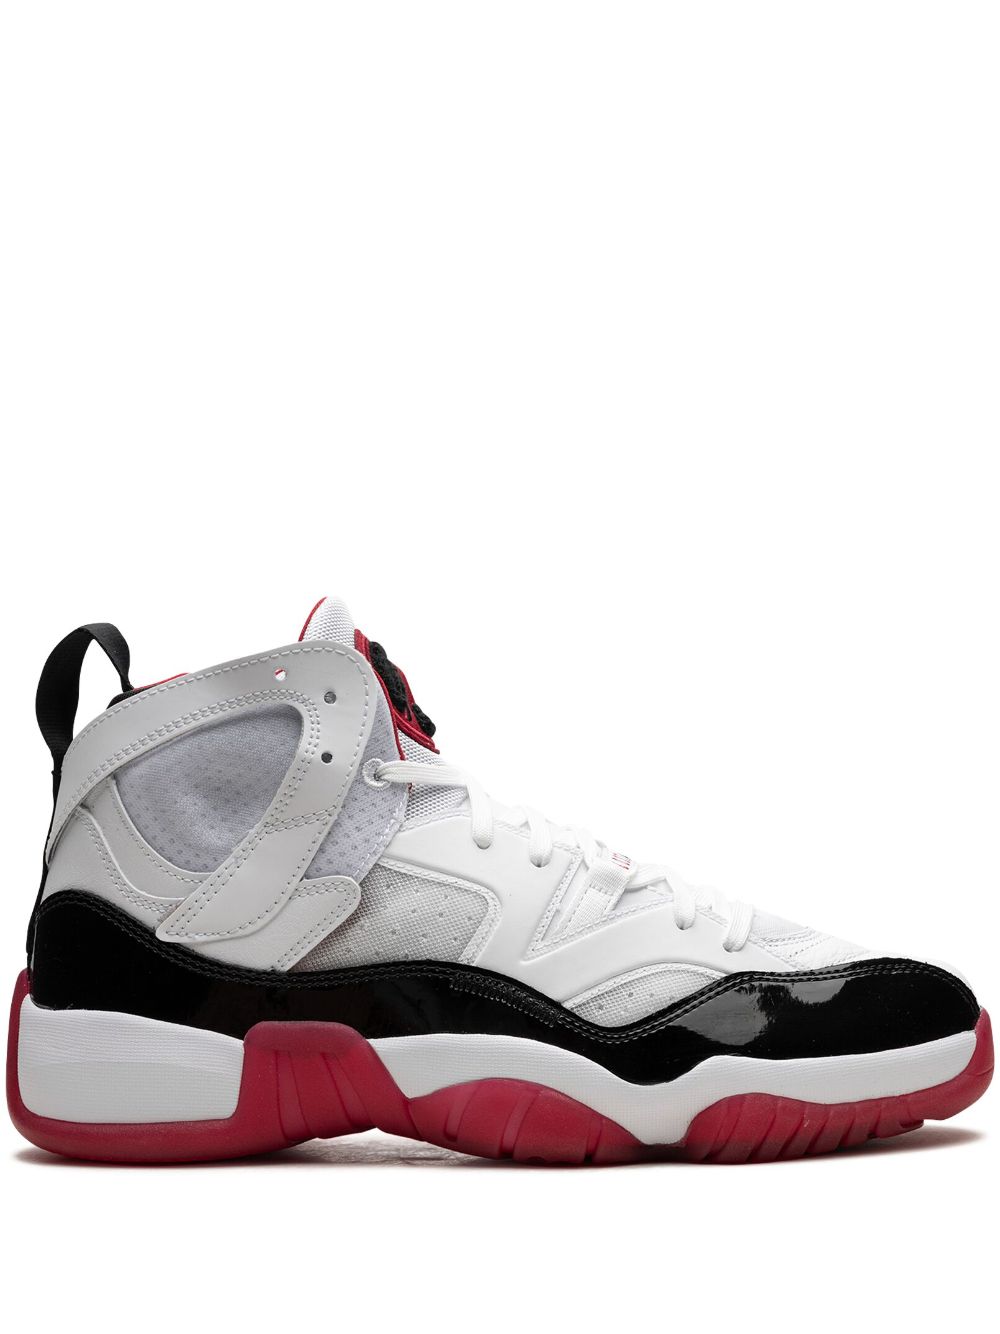 Image 1 of Jordan Jumpman Two Trey "Bred Concord" sneakers